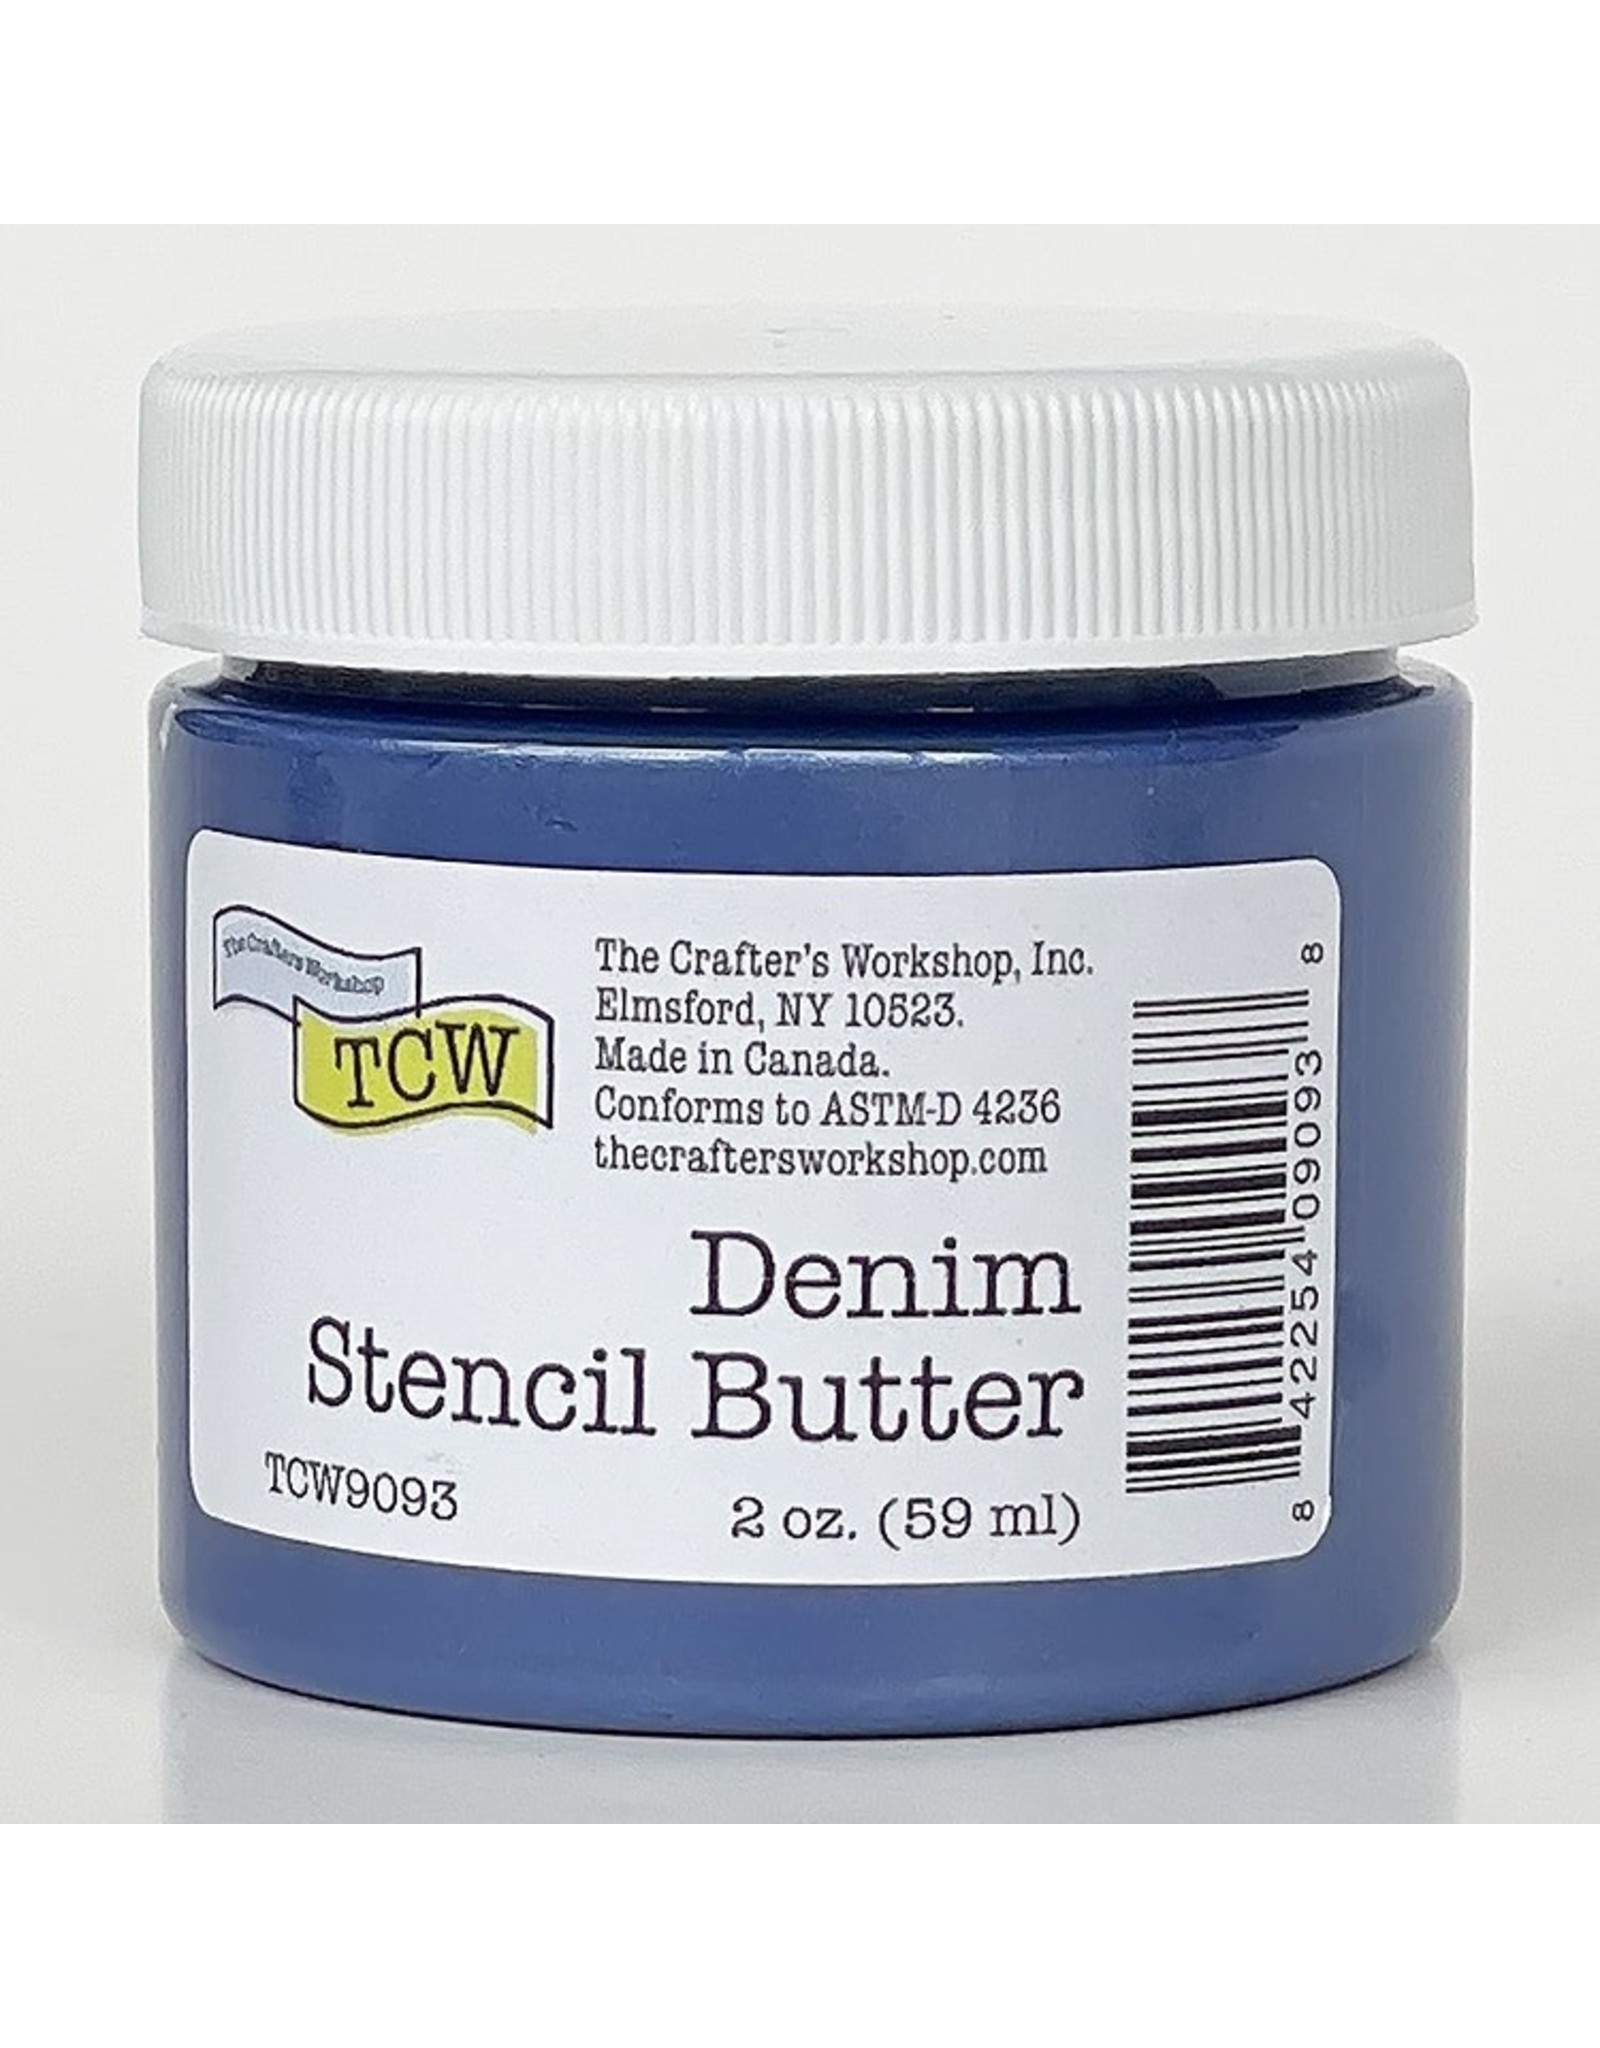 THE CRAFTERS WORKSHOP Stencil Butter 2 oz. - Denim